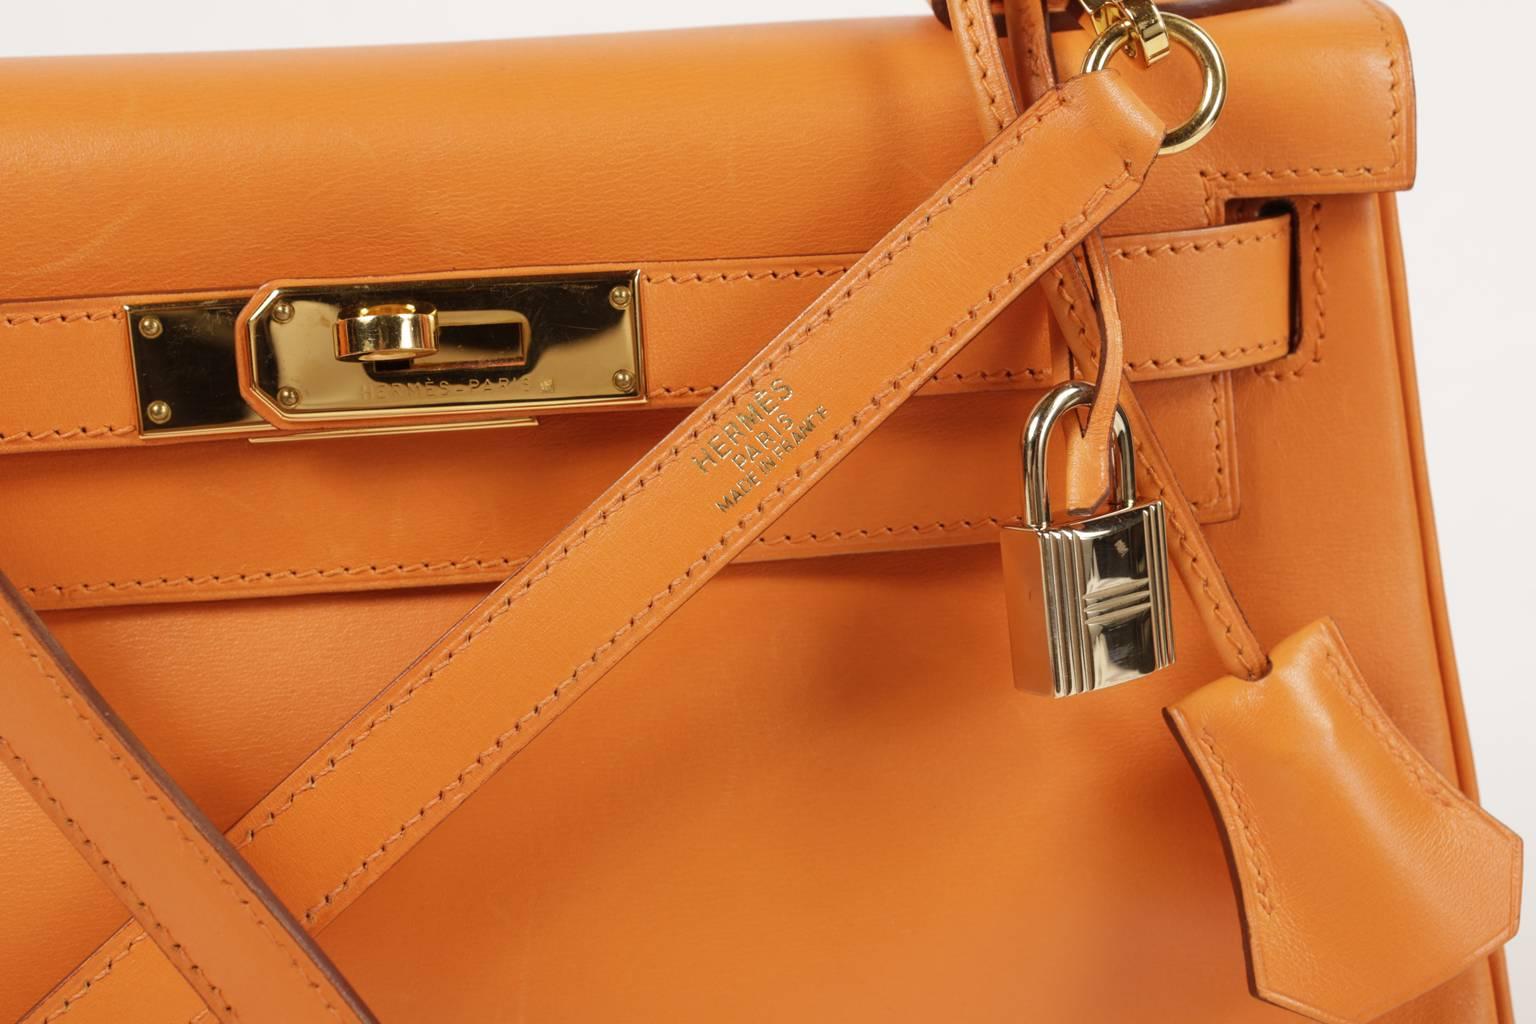 what purse comes in an orange box